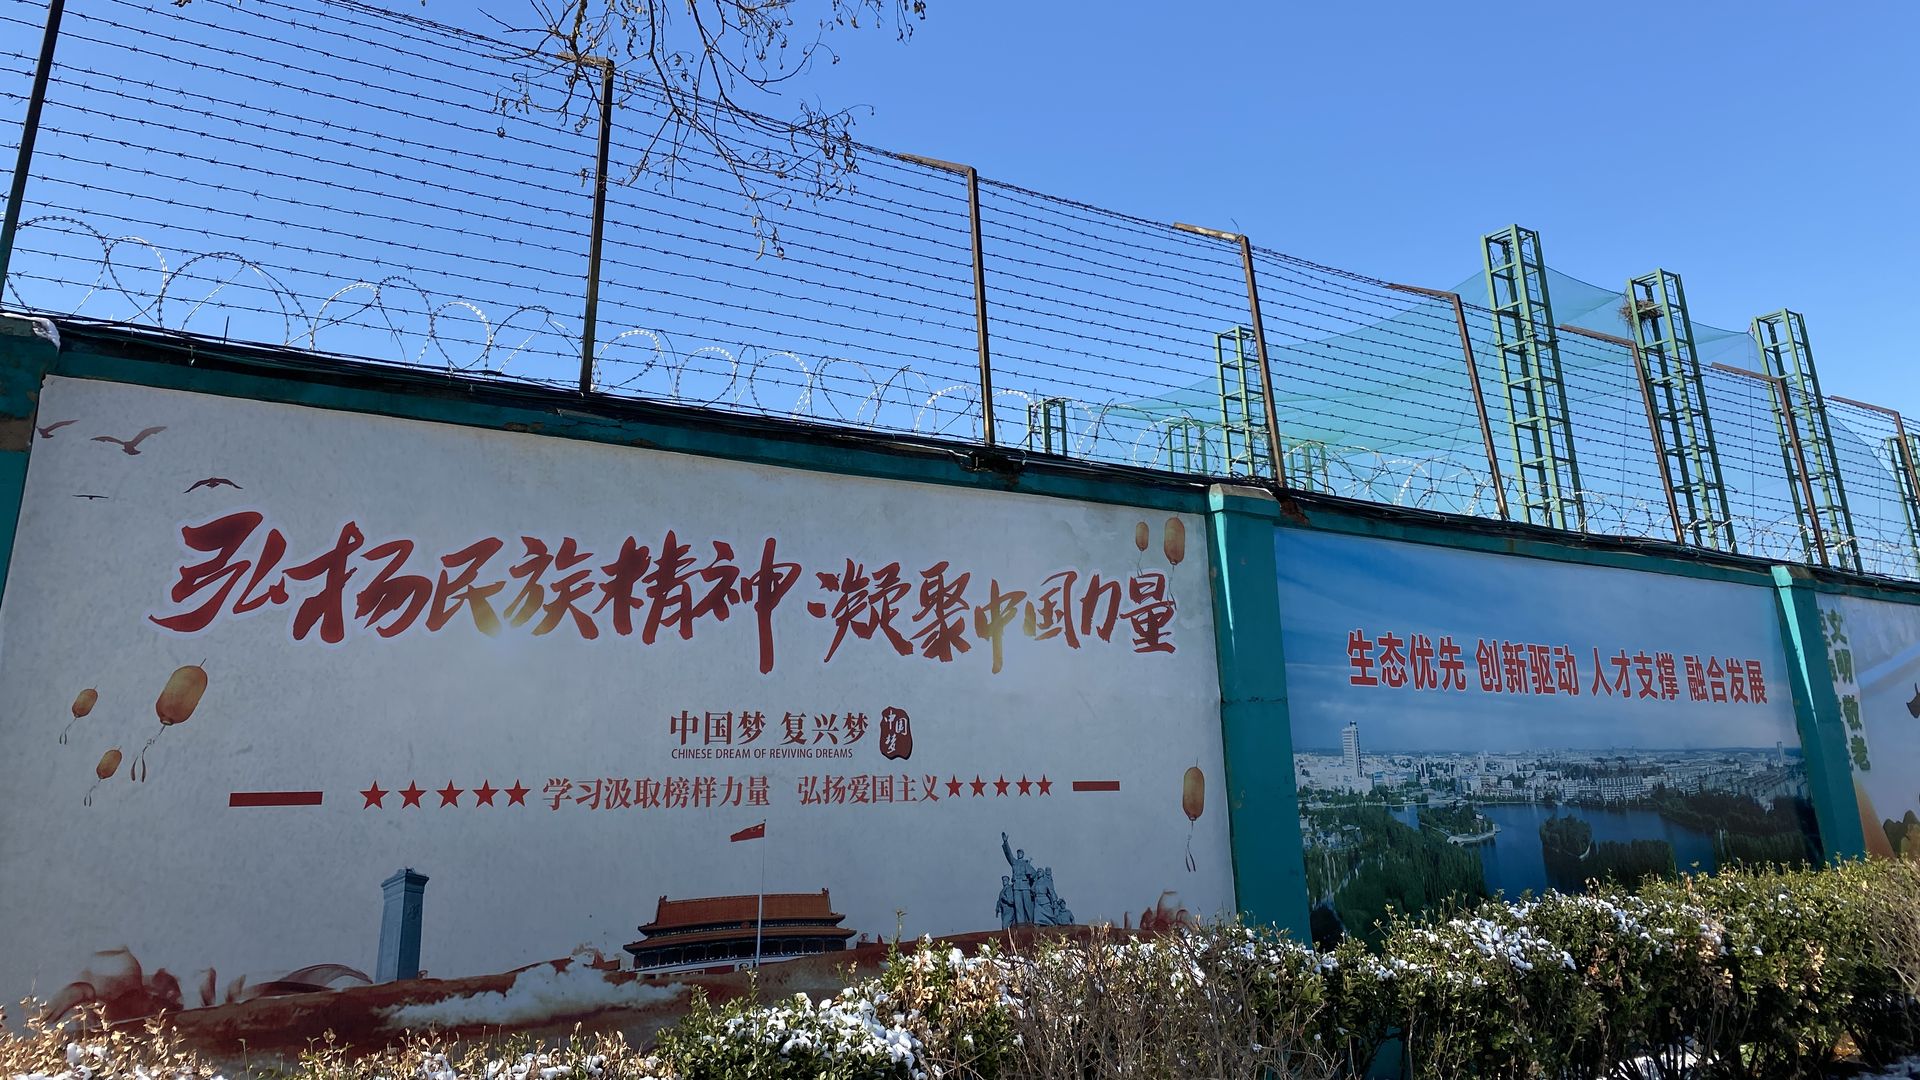 The posters on the wall alongside the Qingdao Taekwang Shoes Co. factory